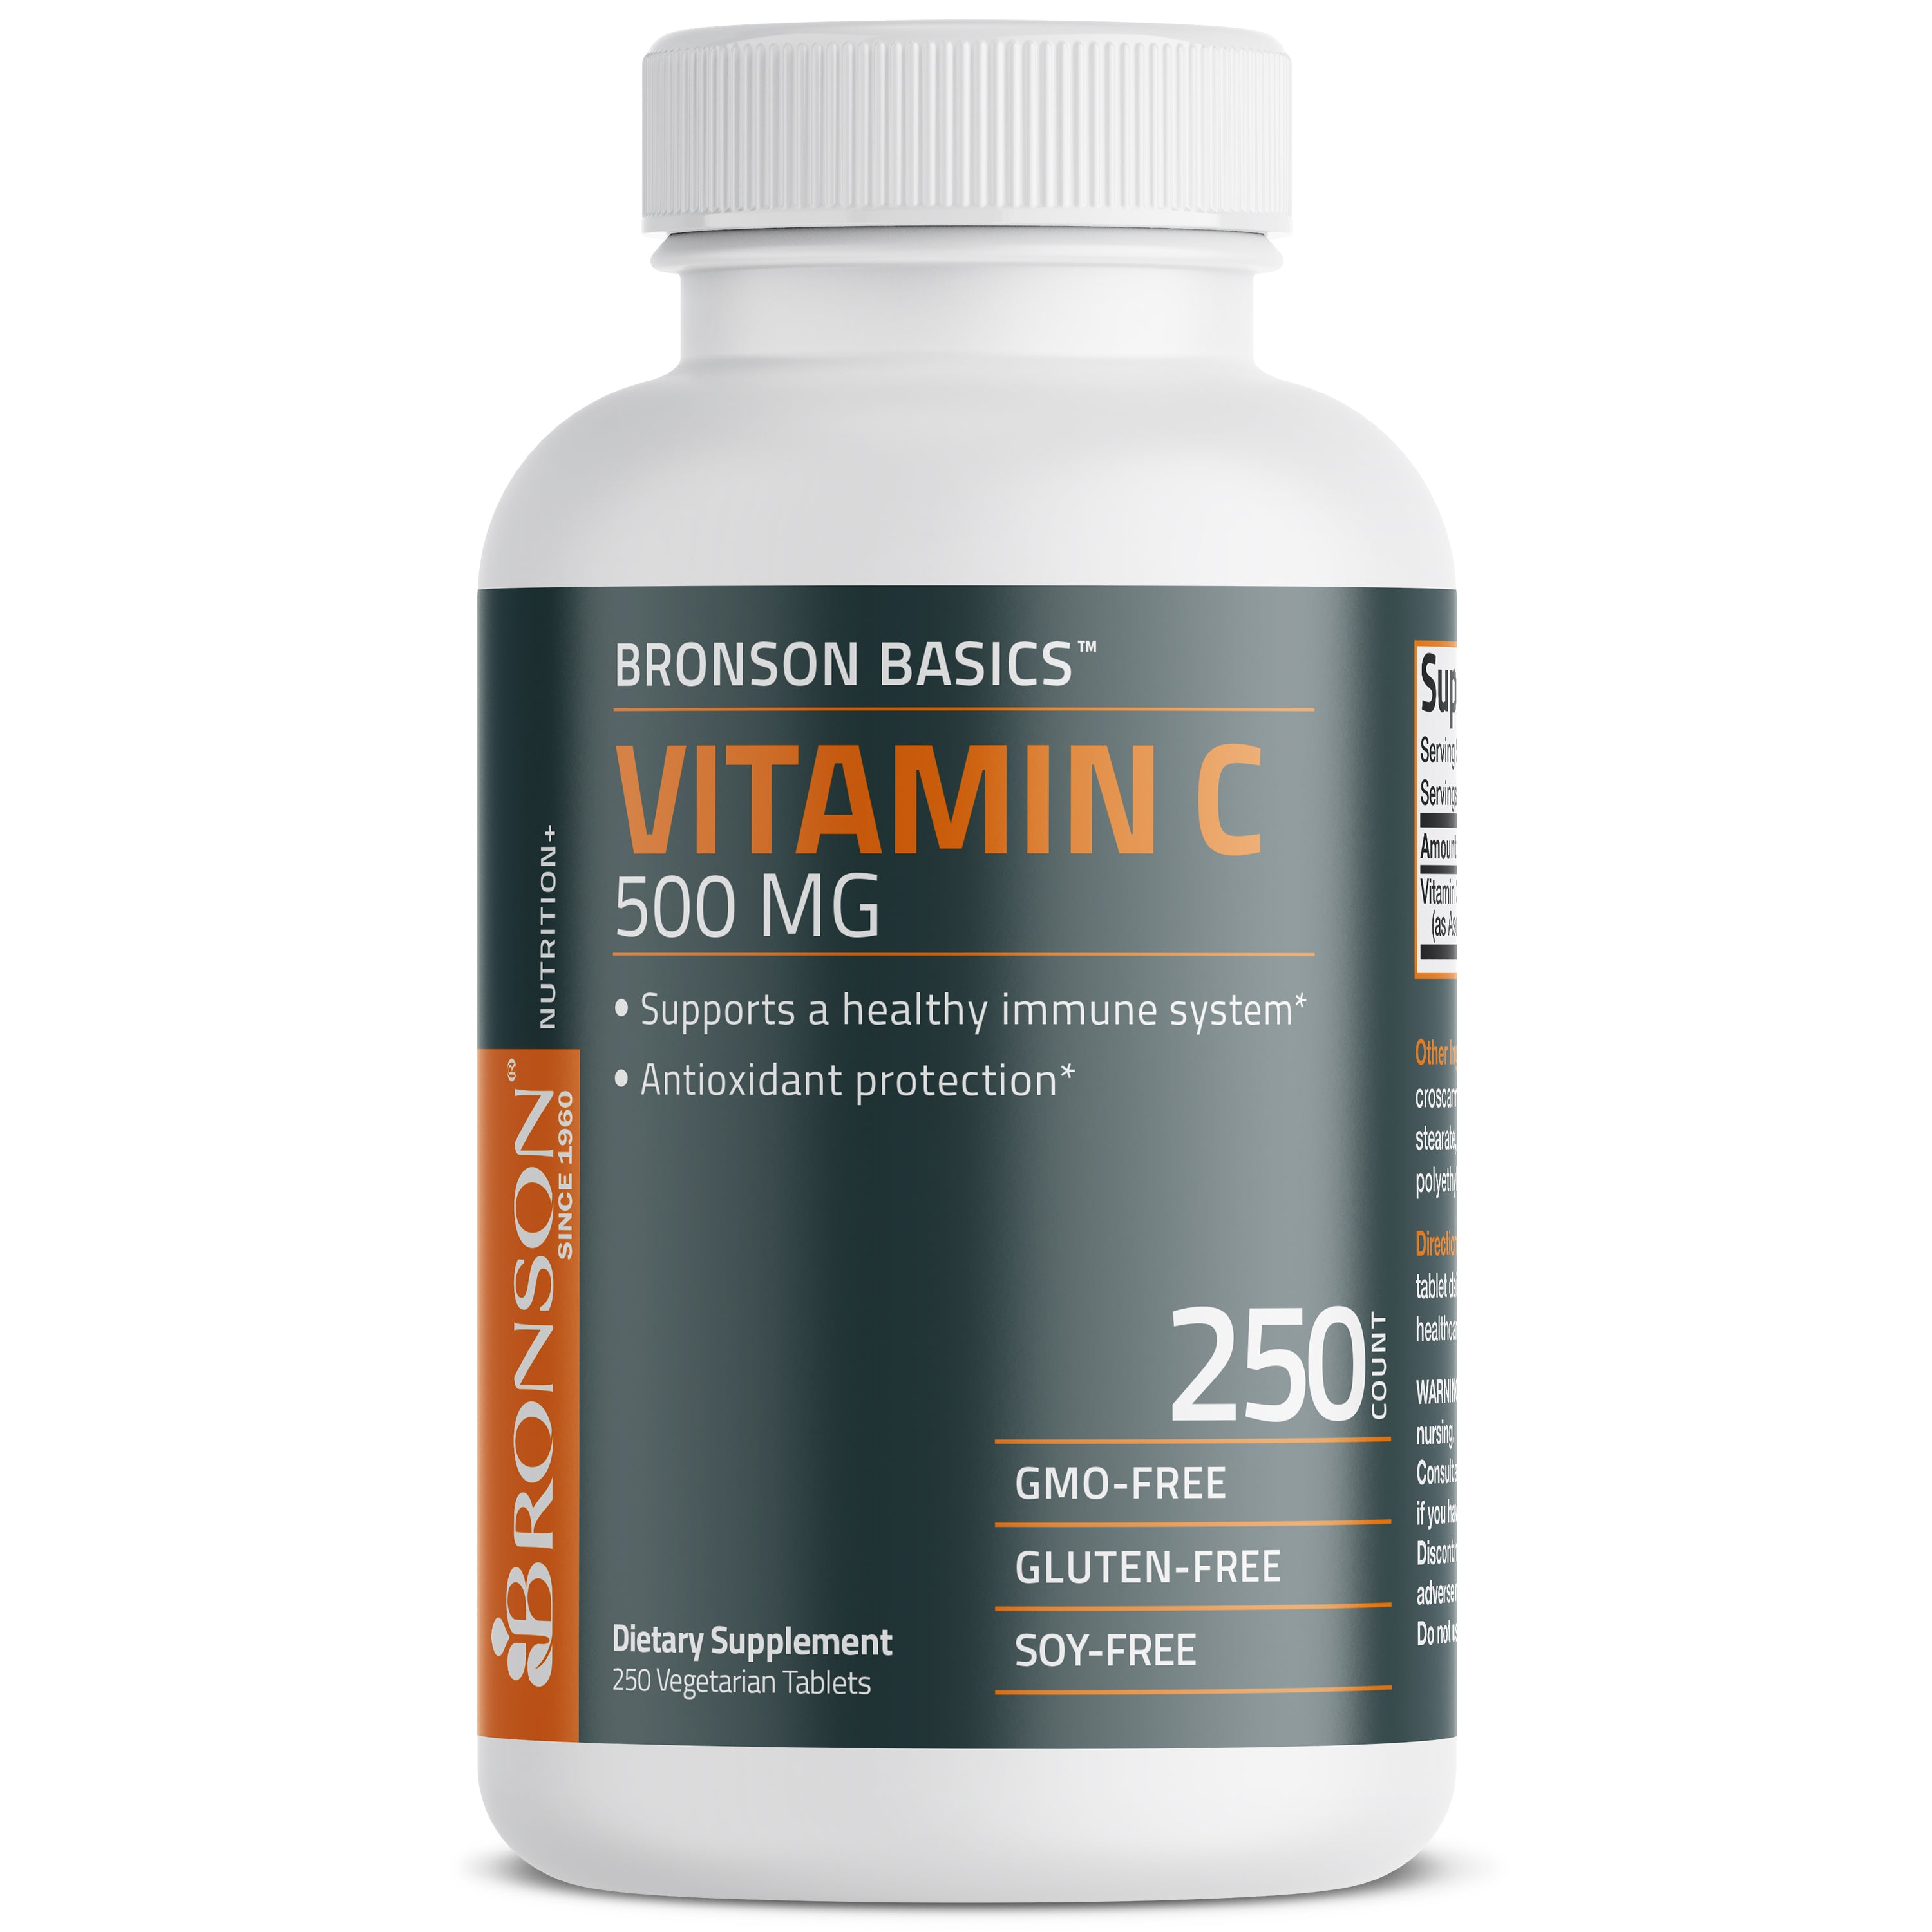 Vitamin C 500 MG view 1 of 4